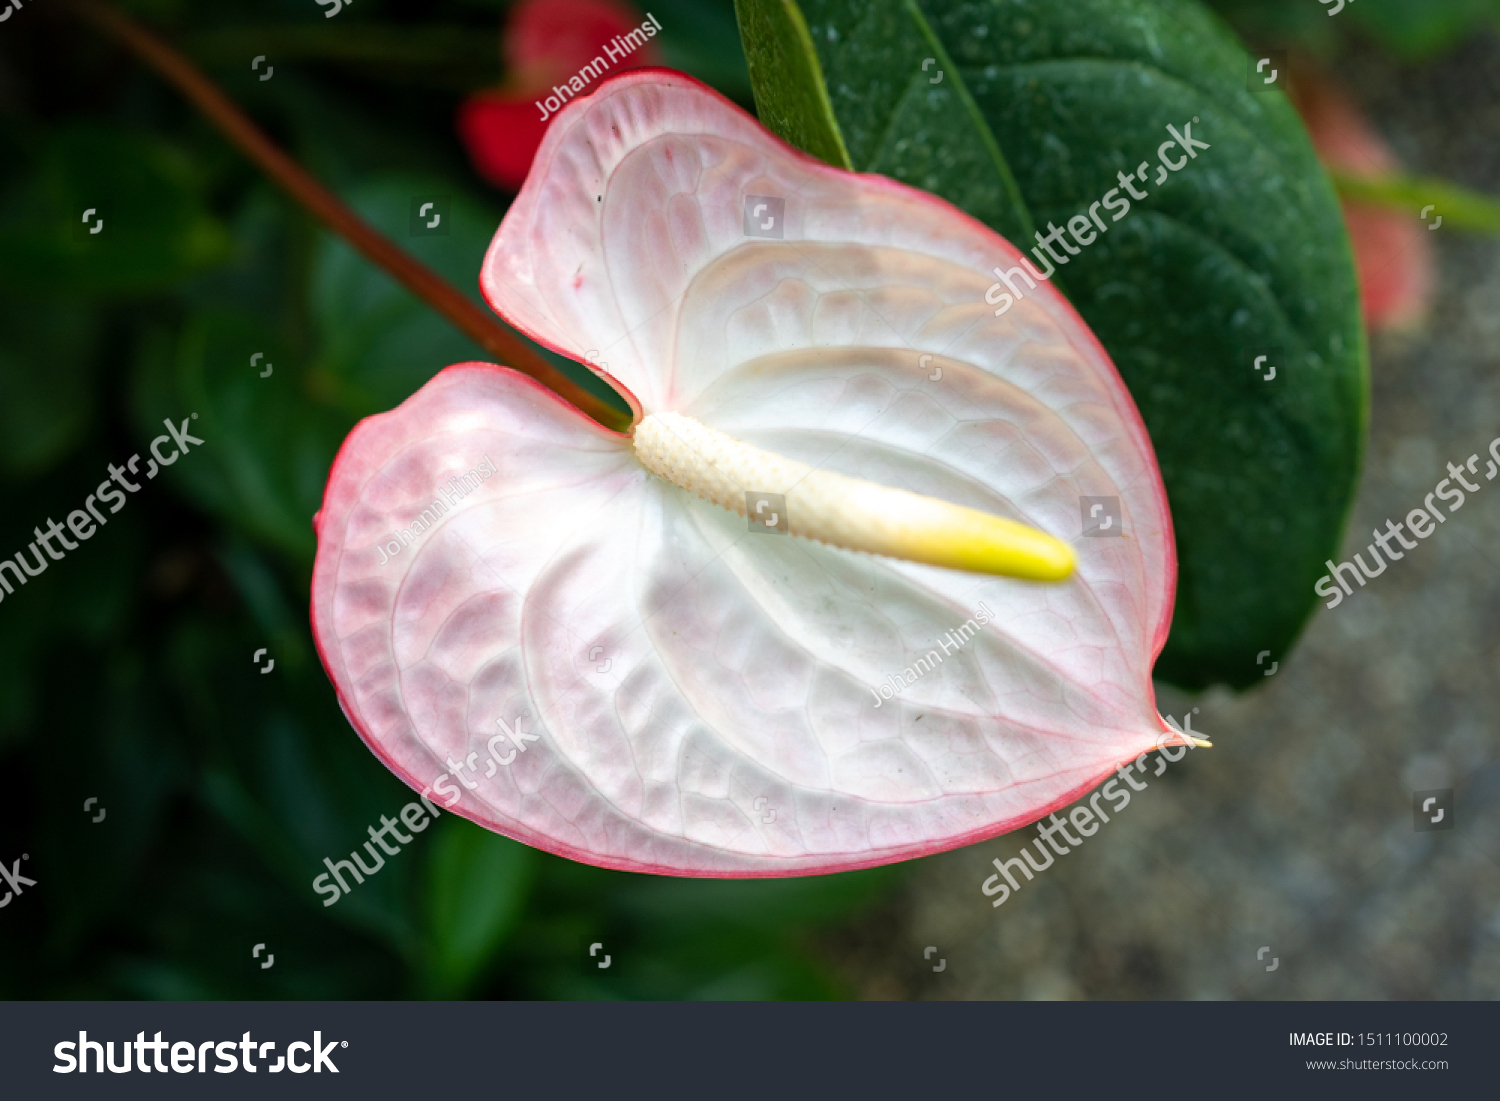 Spathiphyllum Mauna Loa Peace Lily Nature Stock Image 1511100002